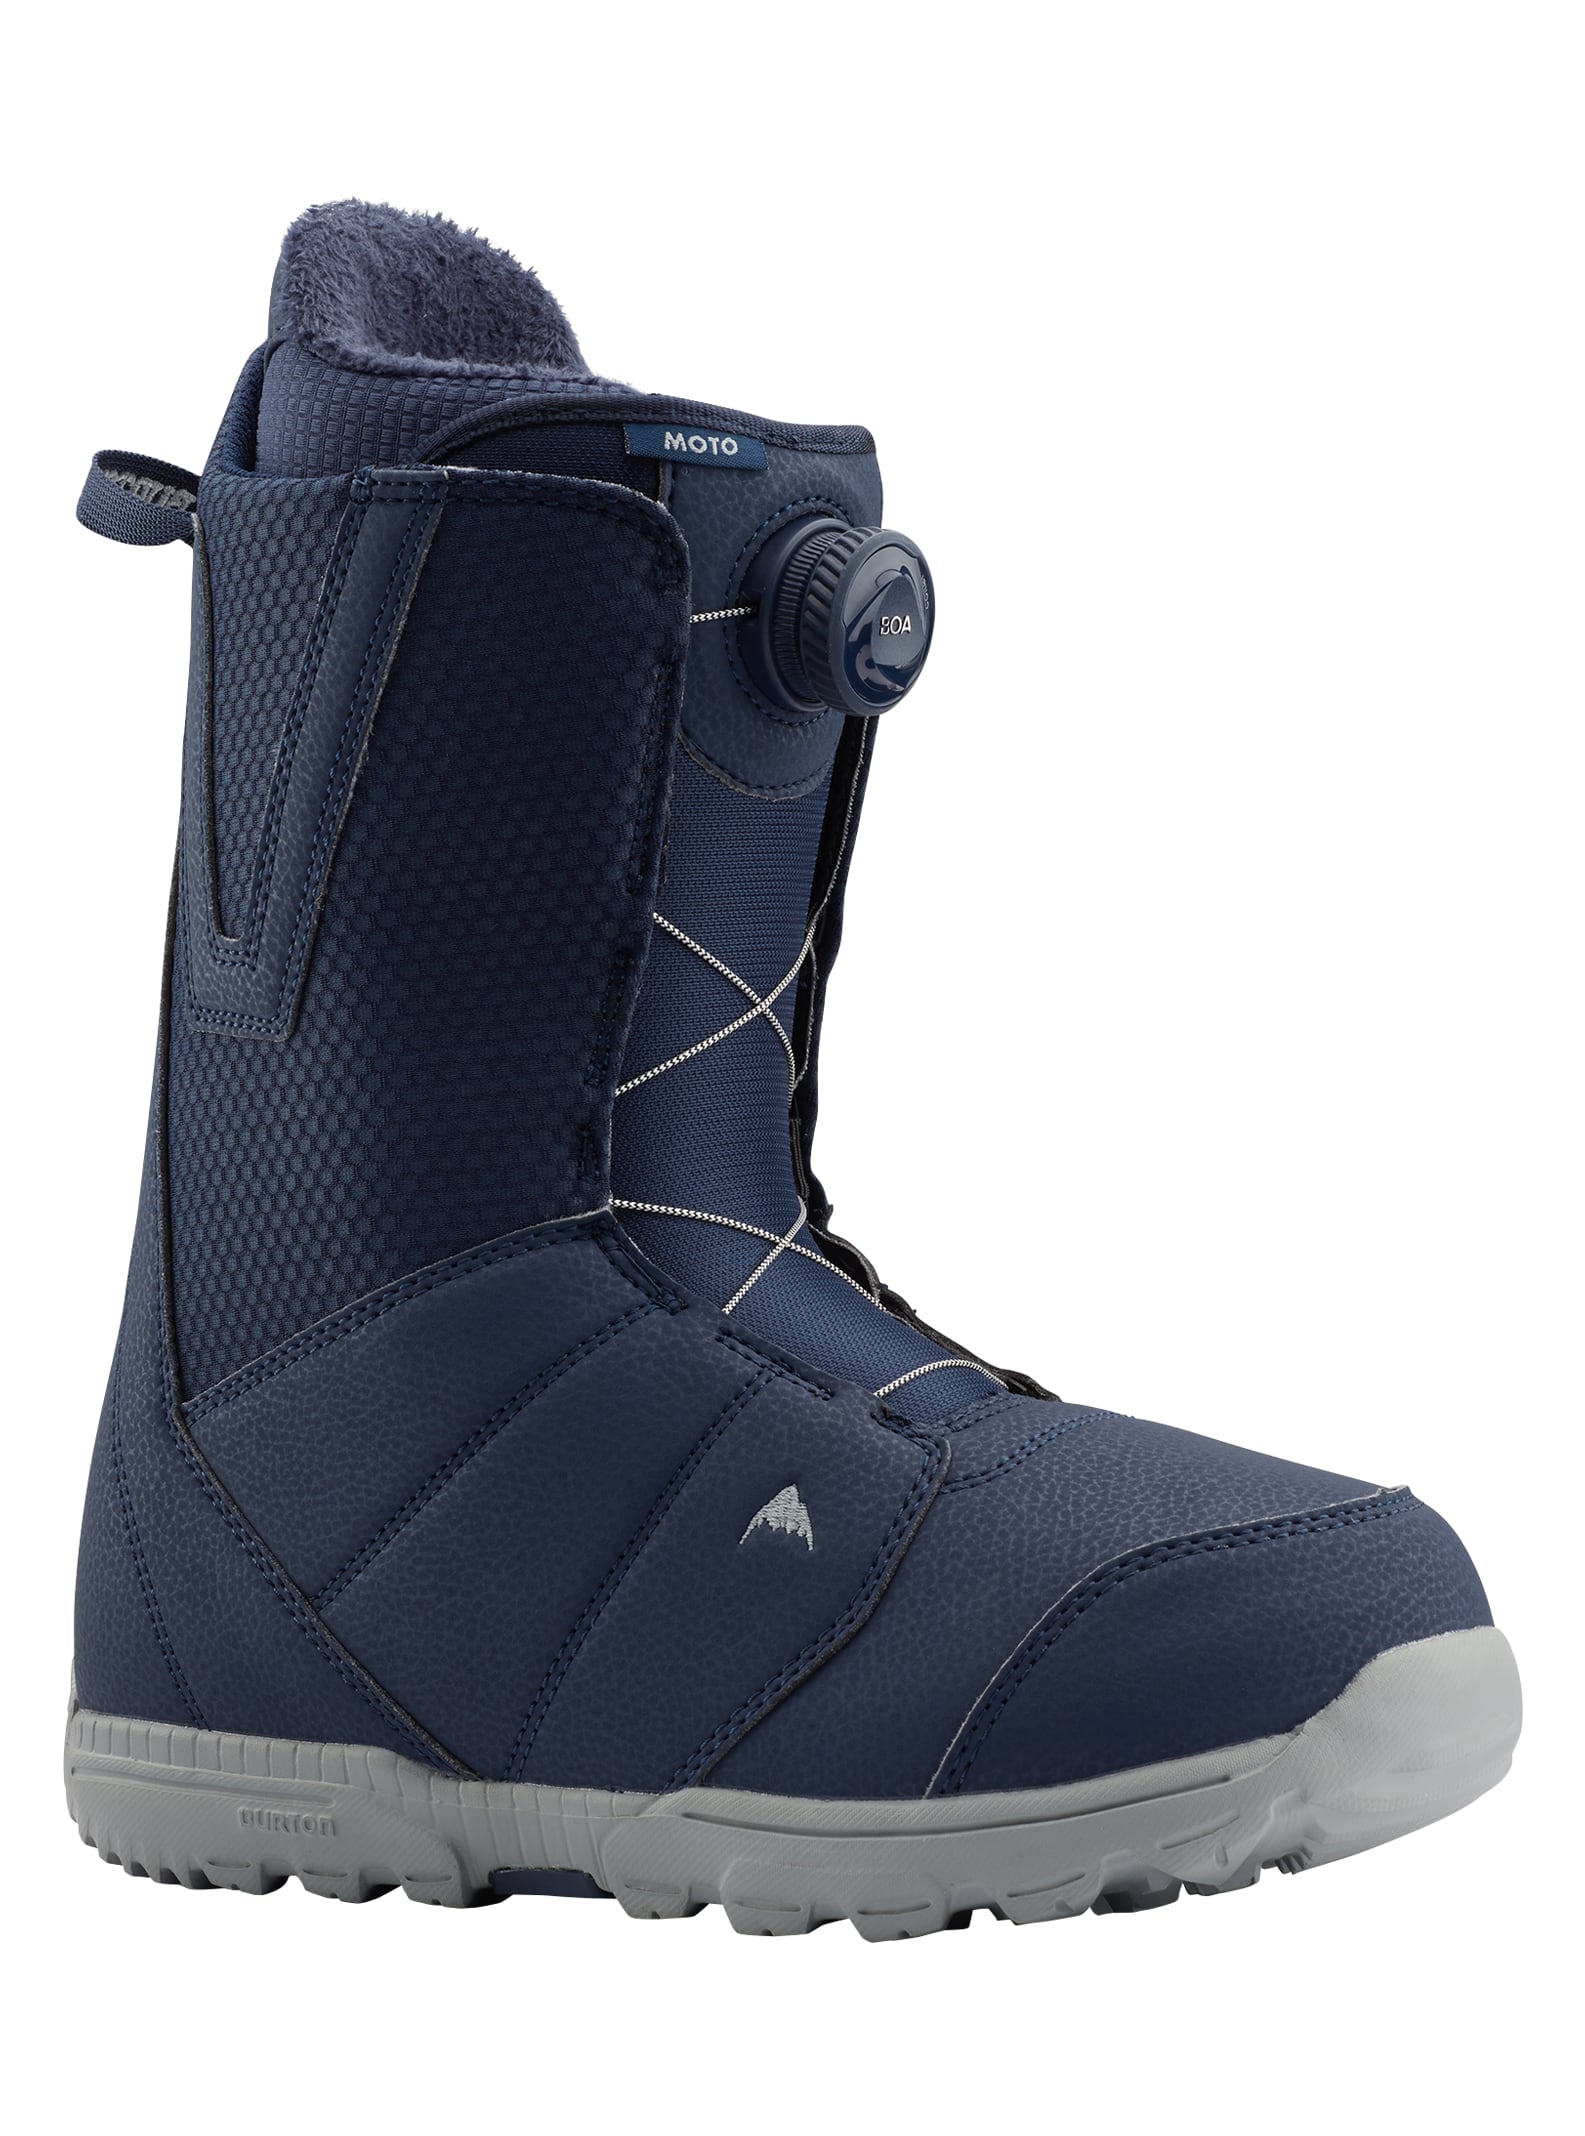 Men's Burton Moto Boa® Snowboard Boot 